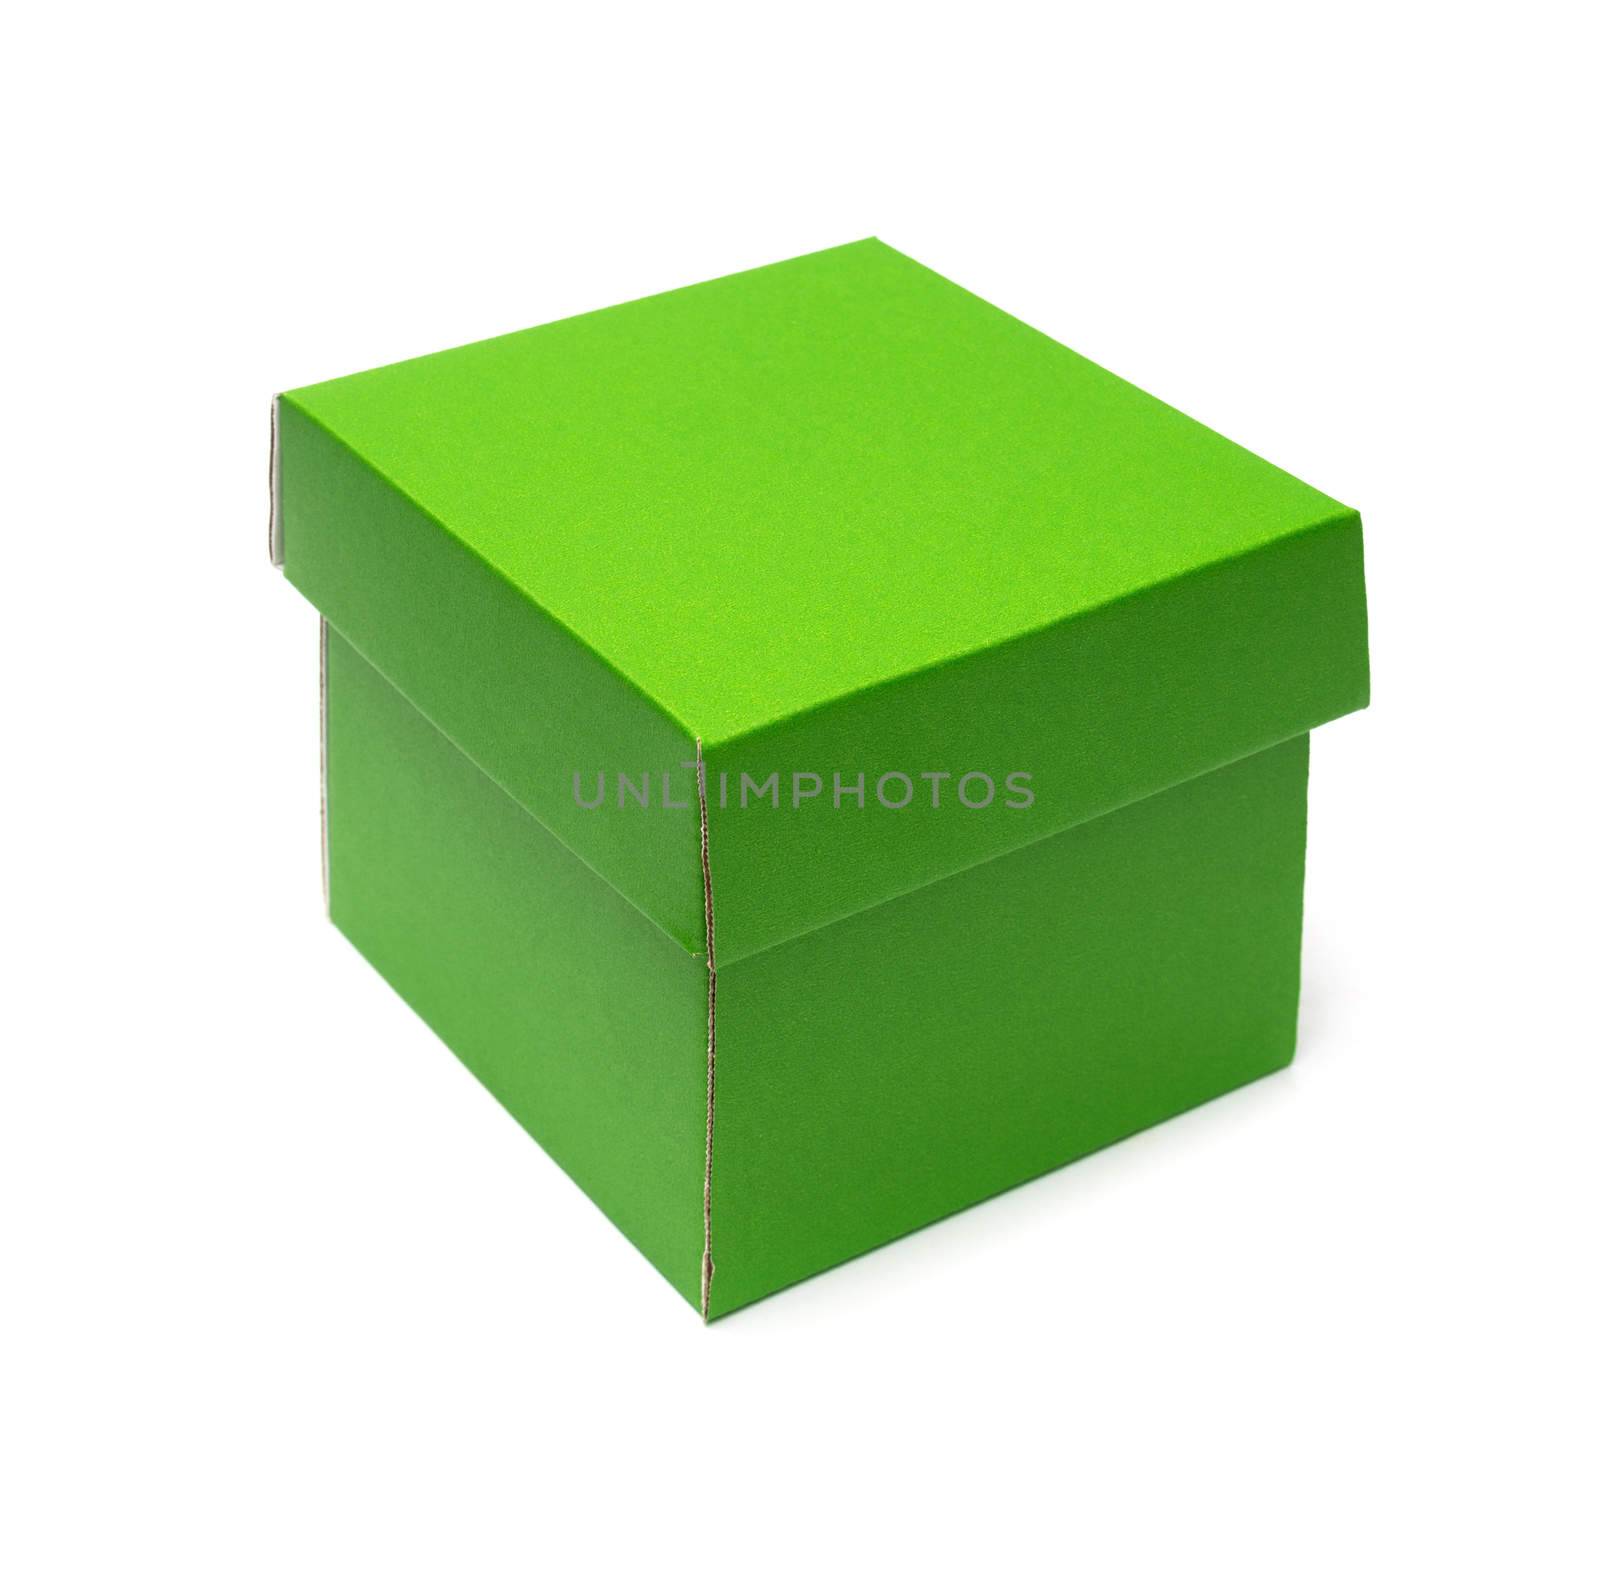 green cardboard box on a white background